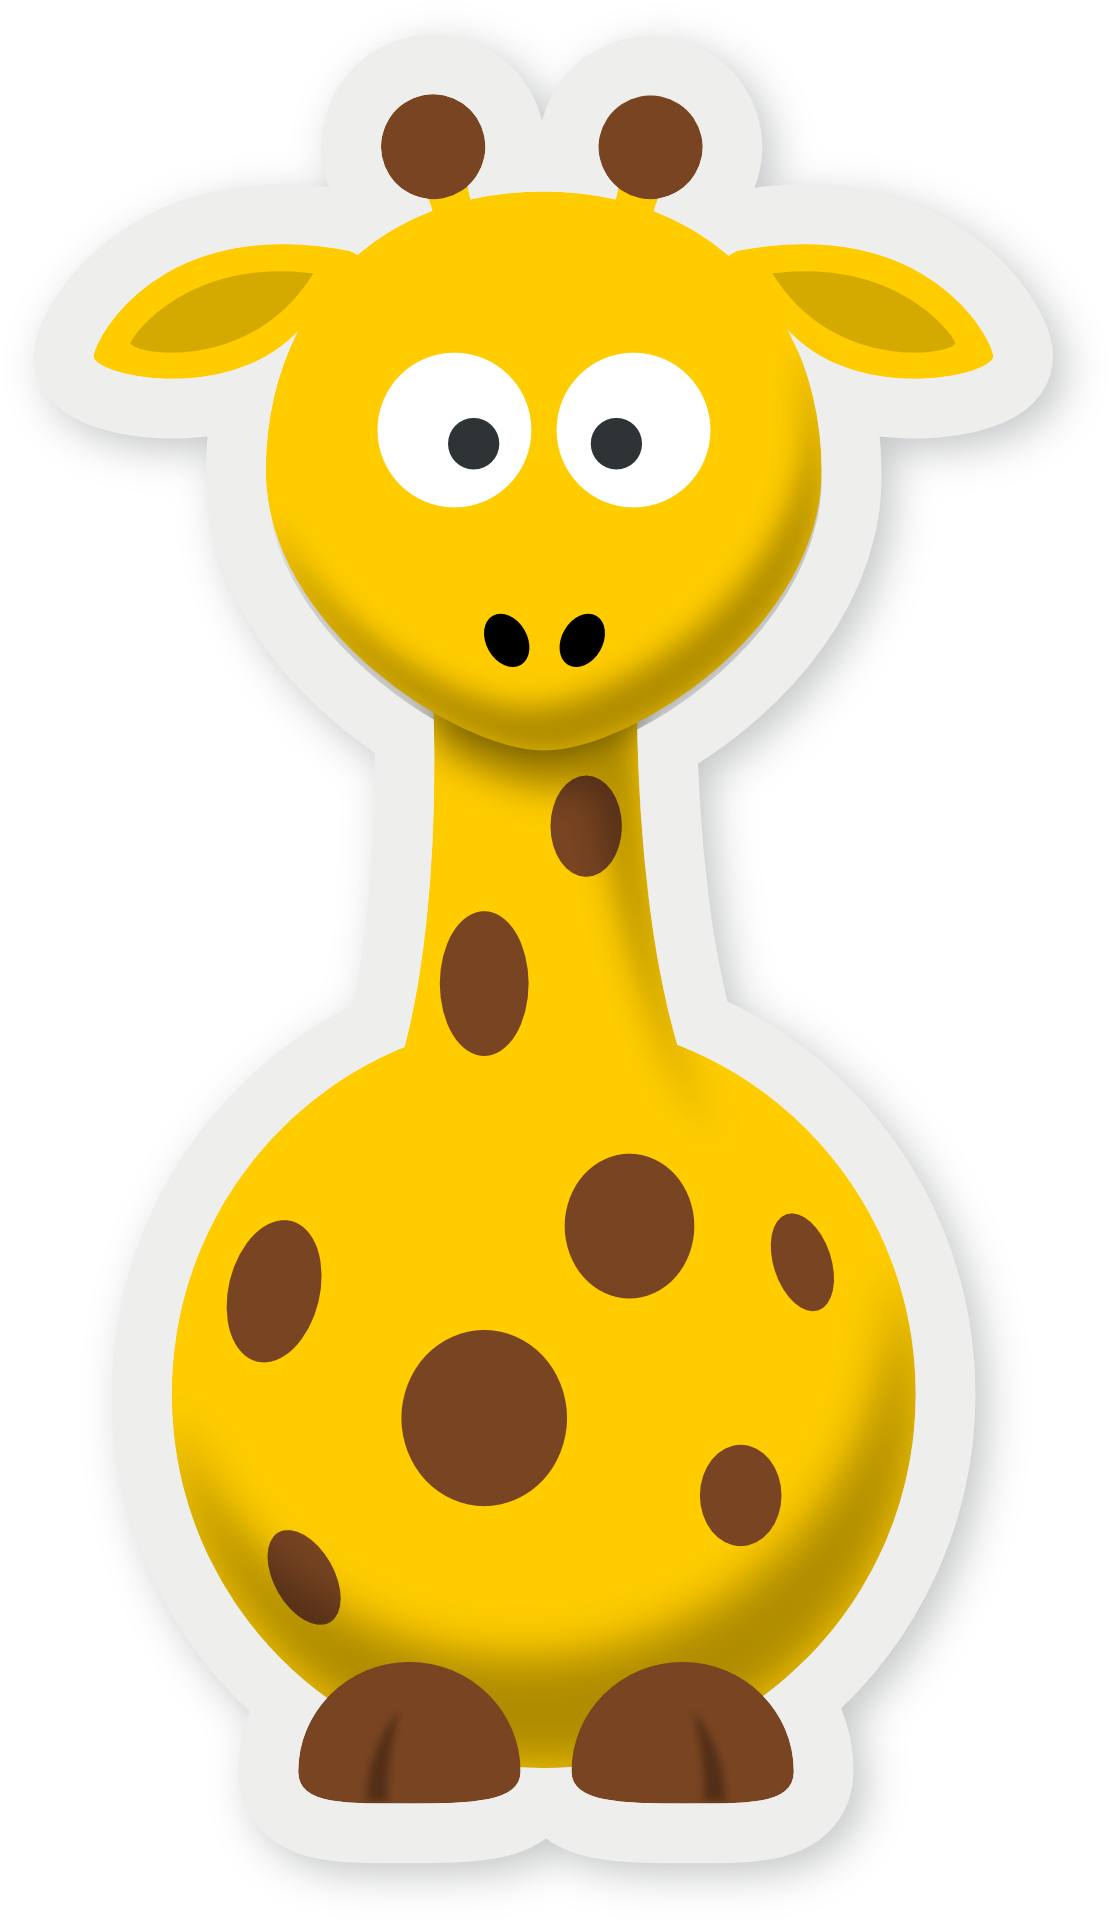 Medical Cartoon Giraffe Anatomy Funny Cartoon Pictures